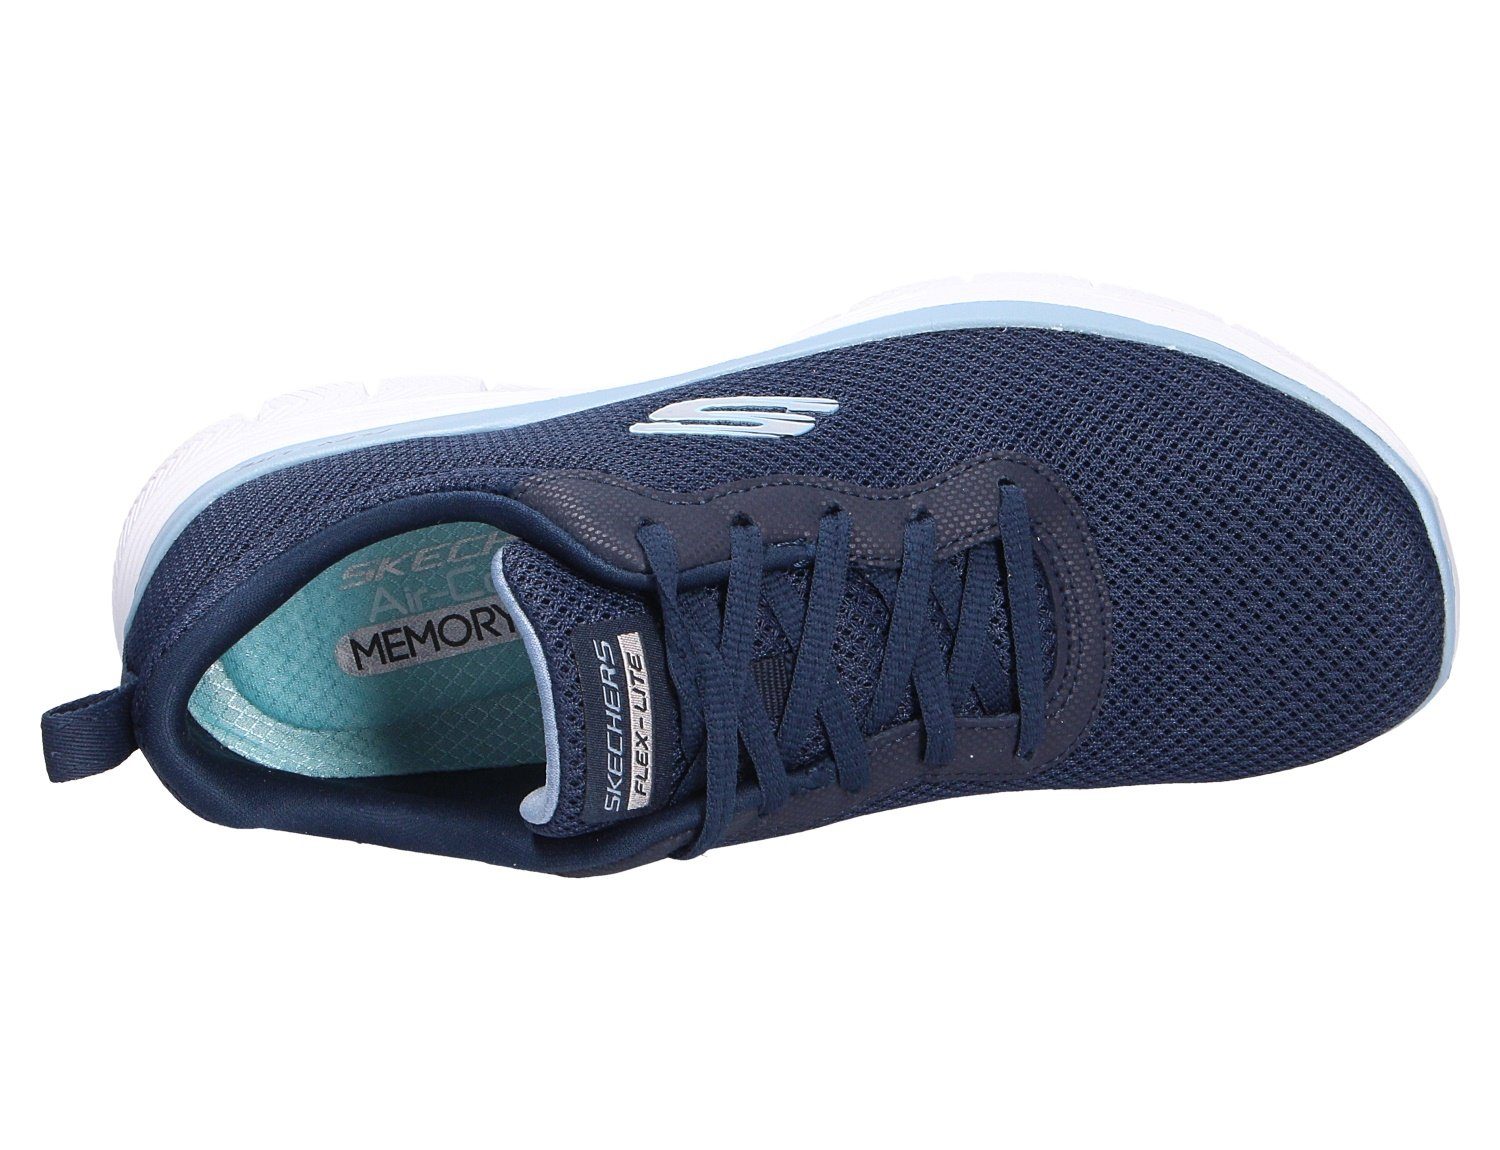 Skechers Sneaker Modischer Schnitt navy/blue